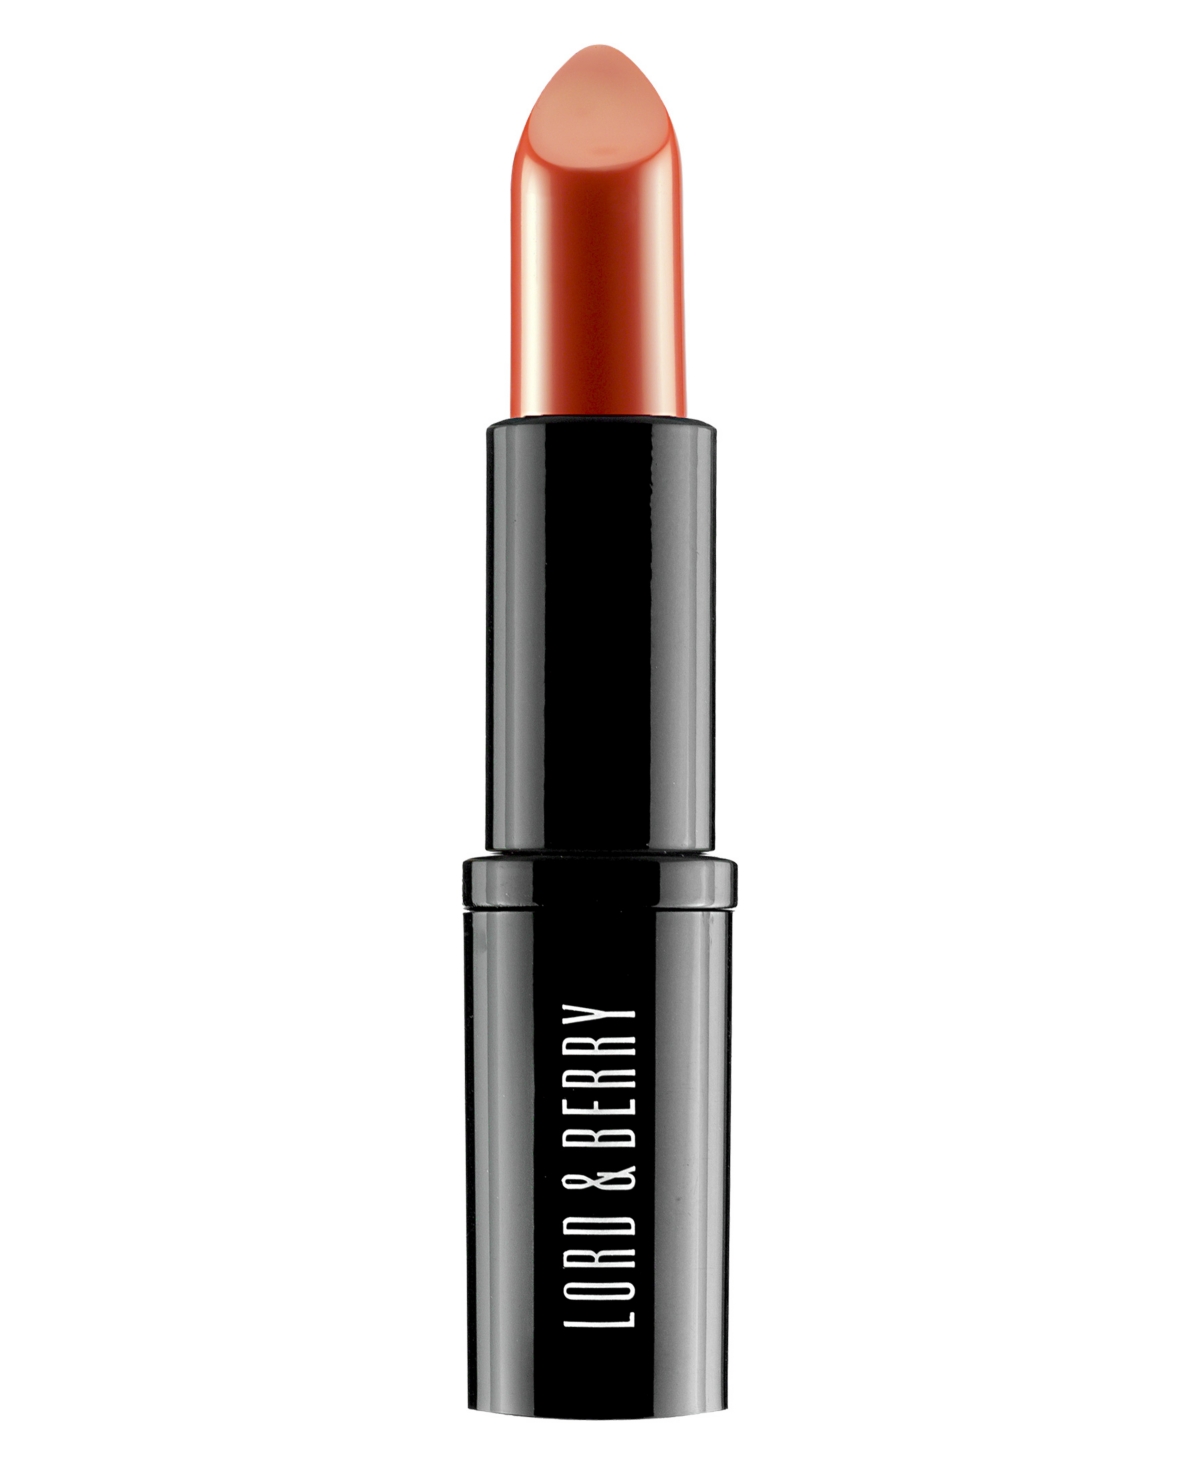 Lord & Berry Vogue Matte Lipstick In Mandarin - Soft Tangerine Orange